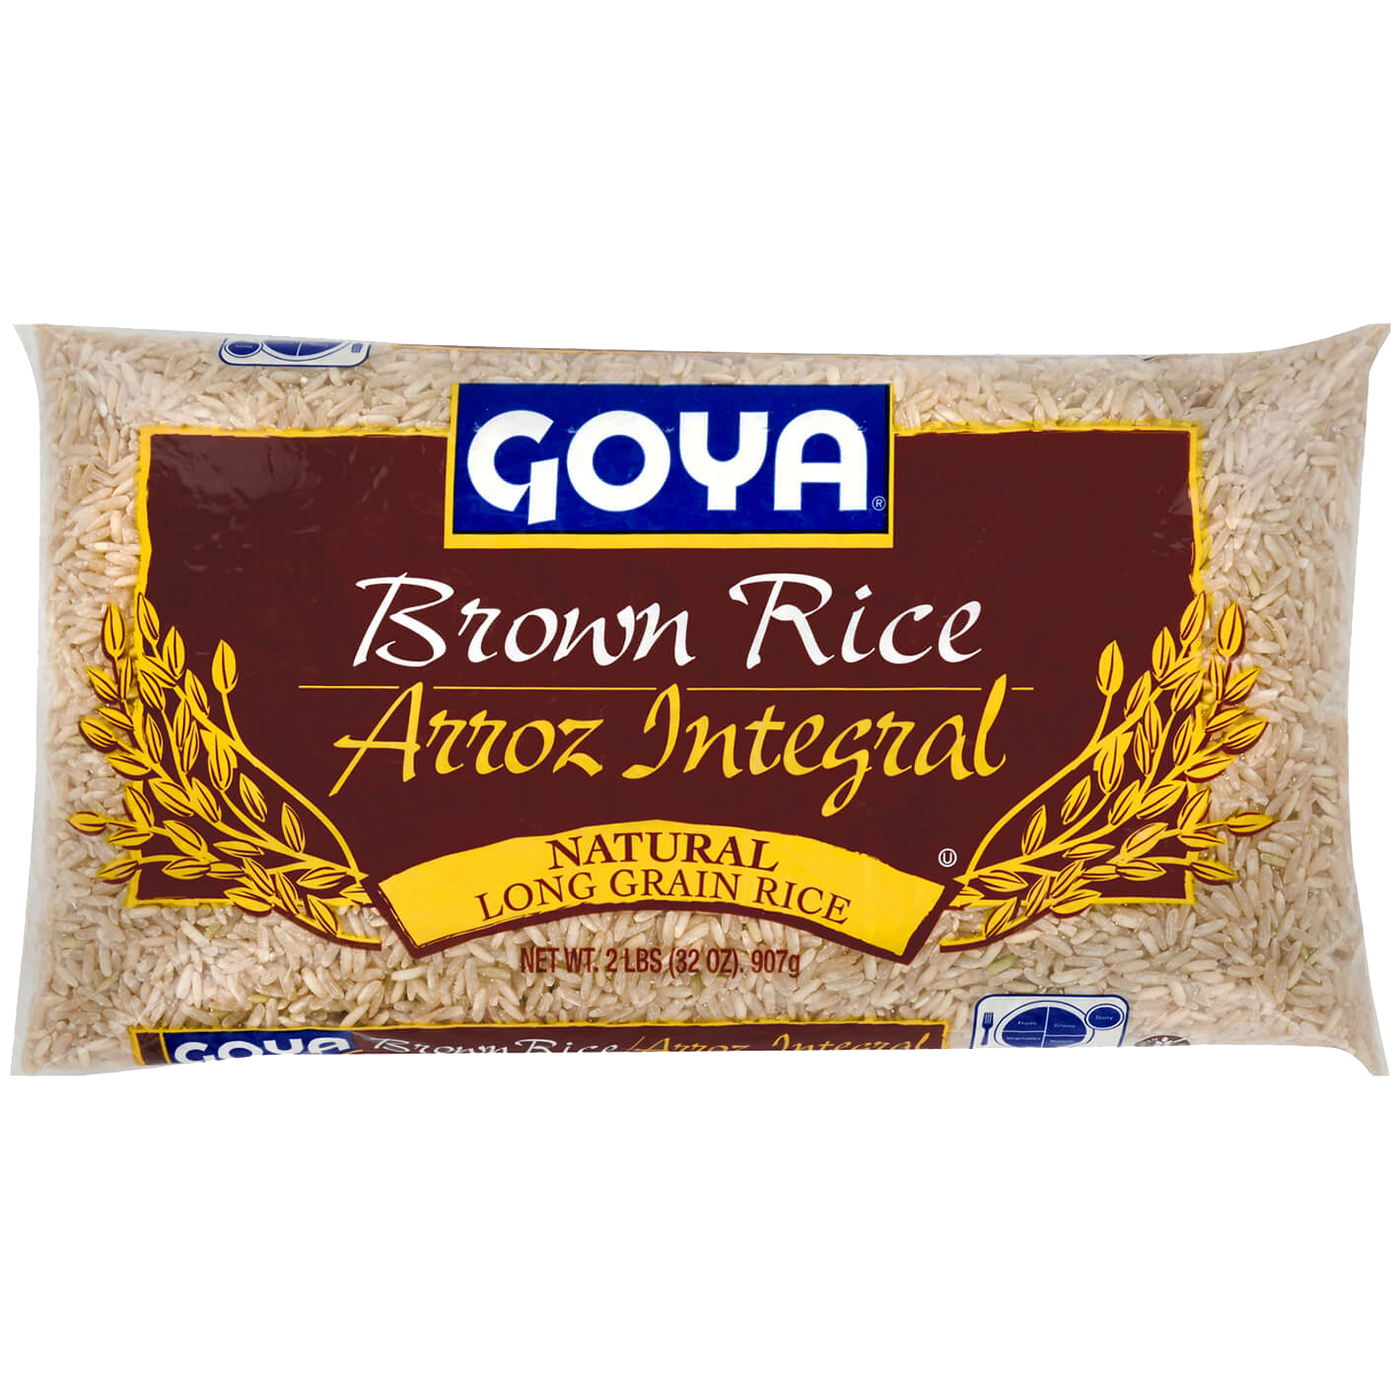   Goya Brown Rice